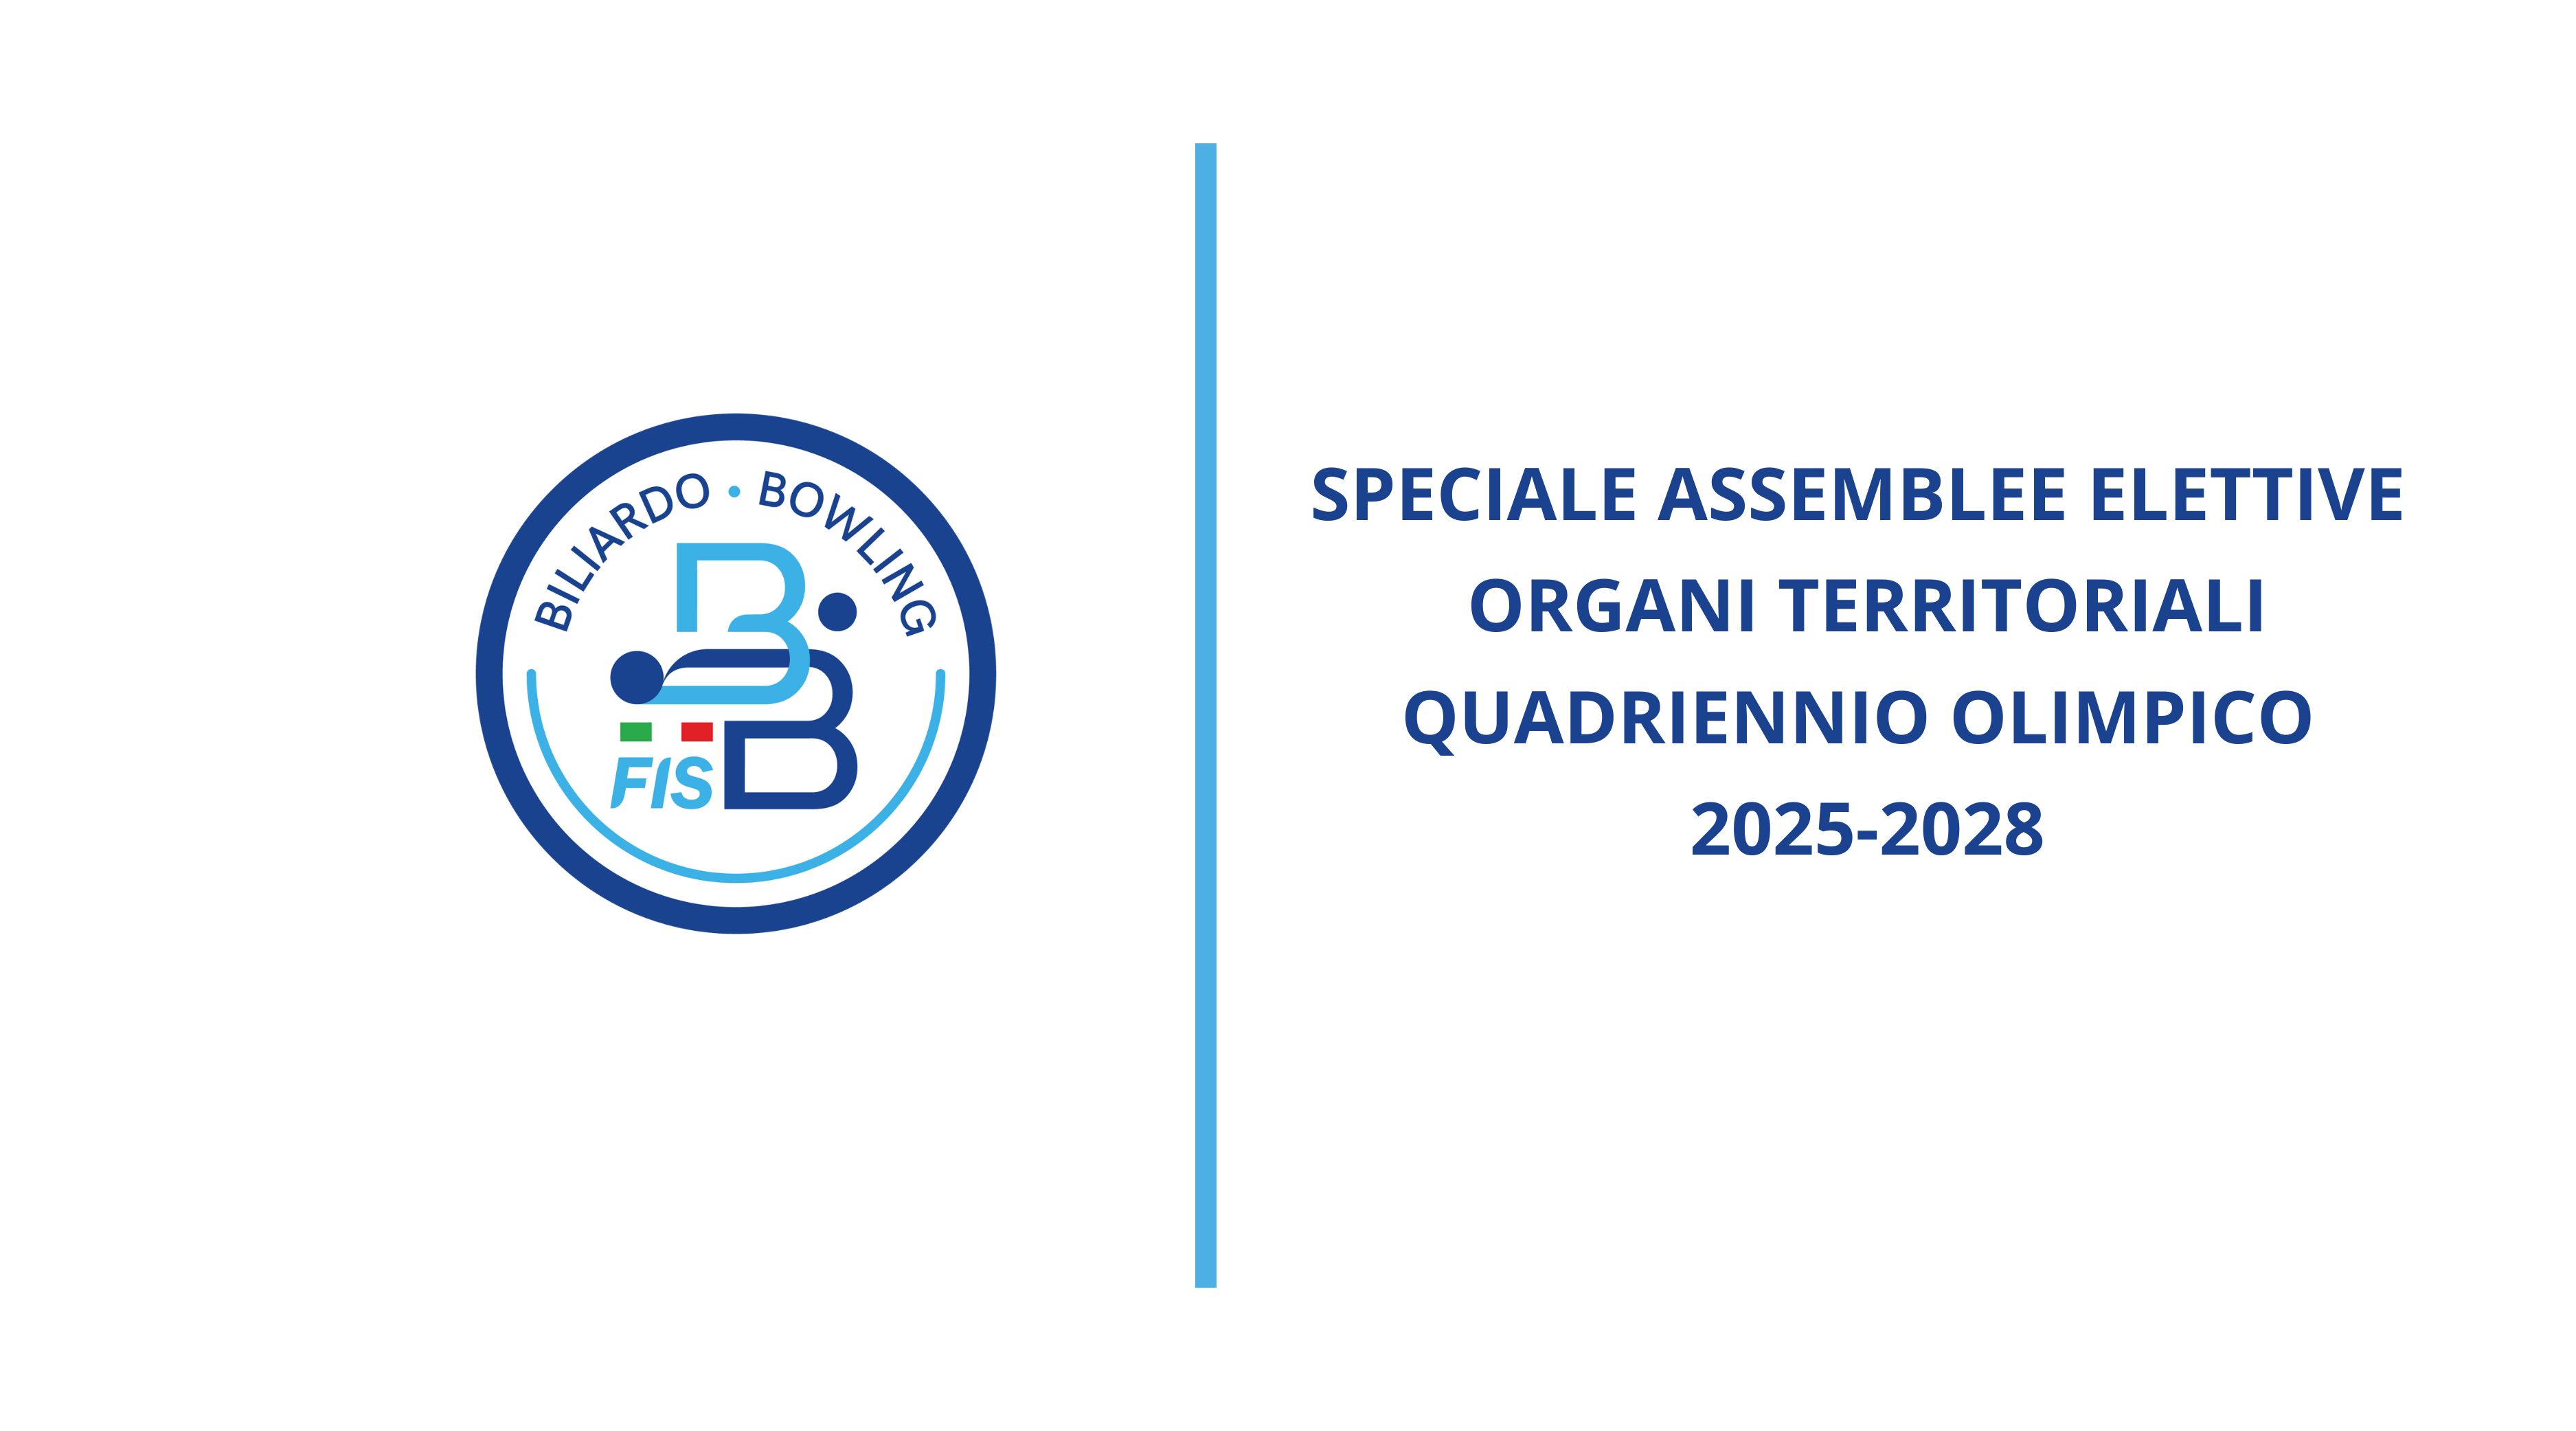 SPECIALE ASSEMBLEE ELETTIVE ORGANI TERRIRORIALI: QUADRIENNIO OLIMPICO 2025-2028